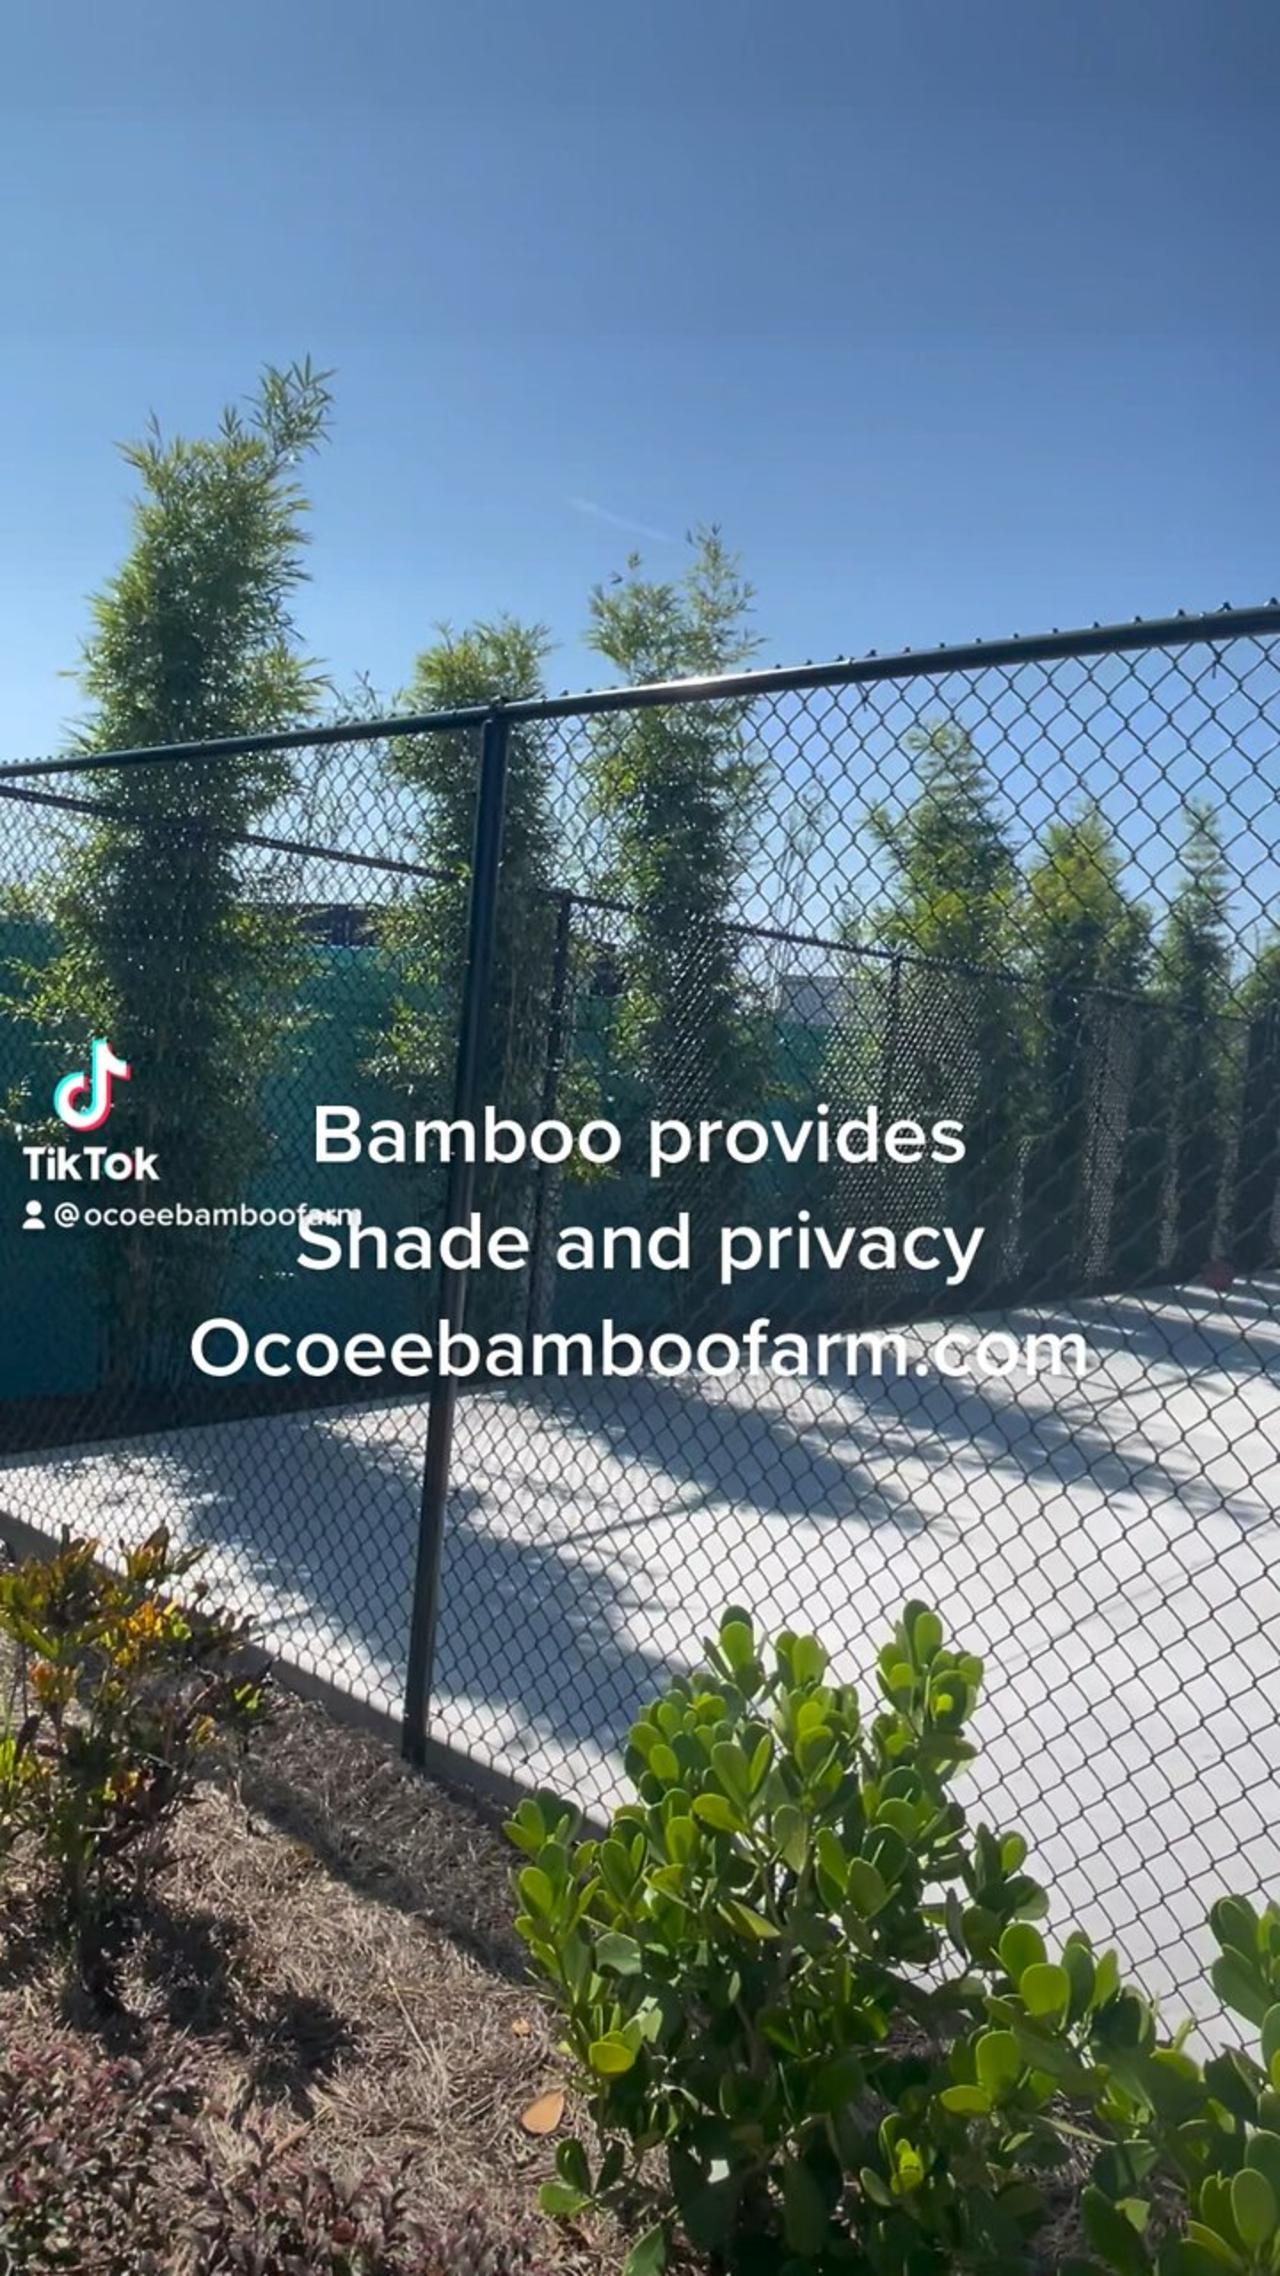 Florida privacy and shade plants Fast Growing Ocoee Bamboo Farm 407-777-4807